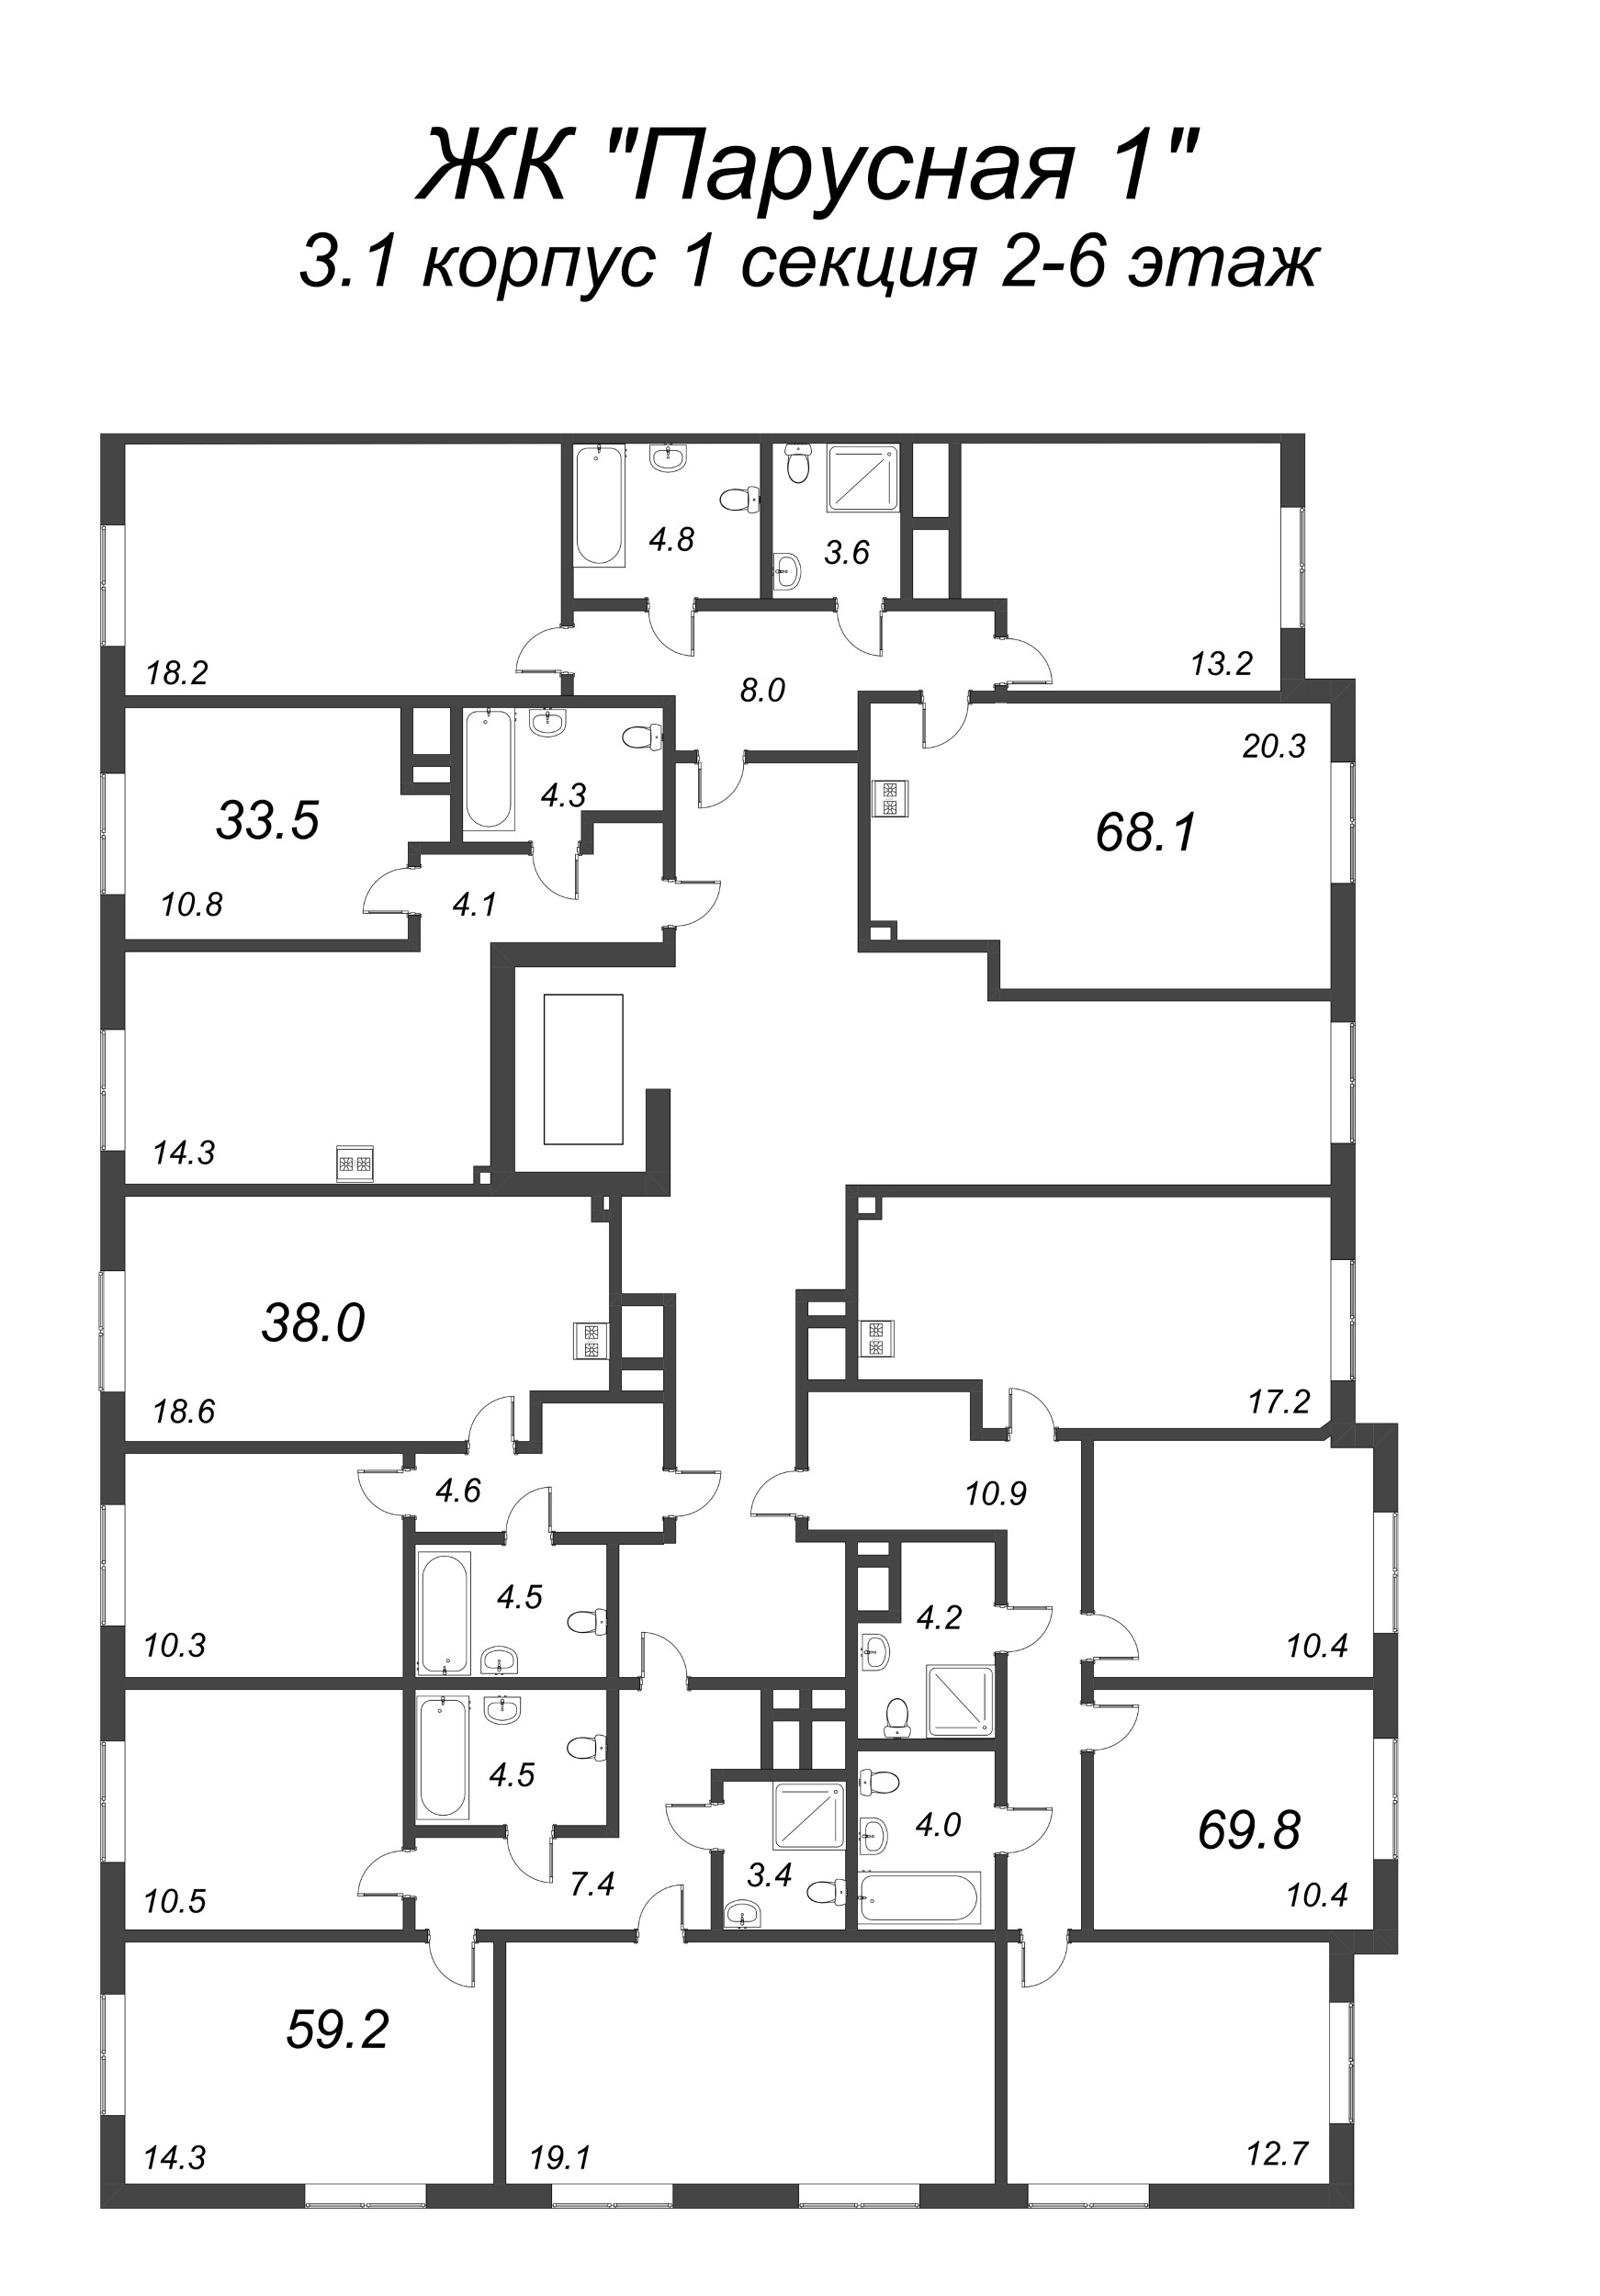 2-комнатная (Евро) квартира, 38 м² - планировка этажа